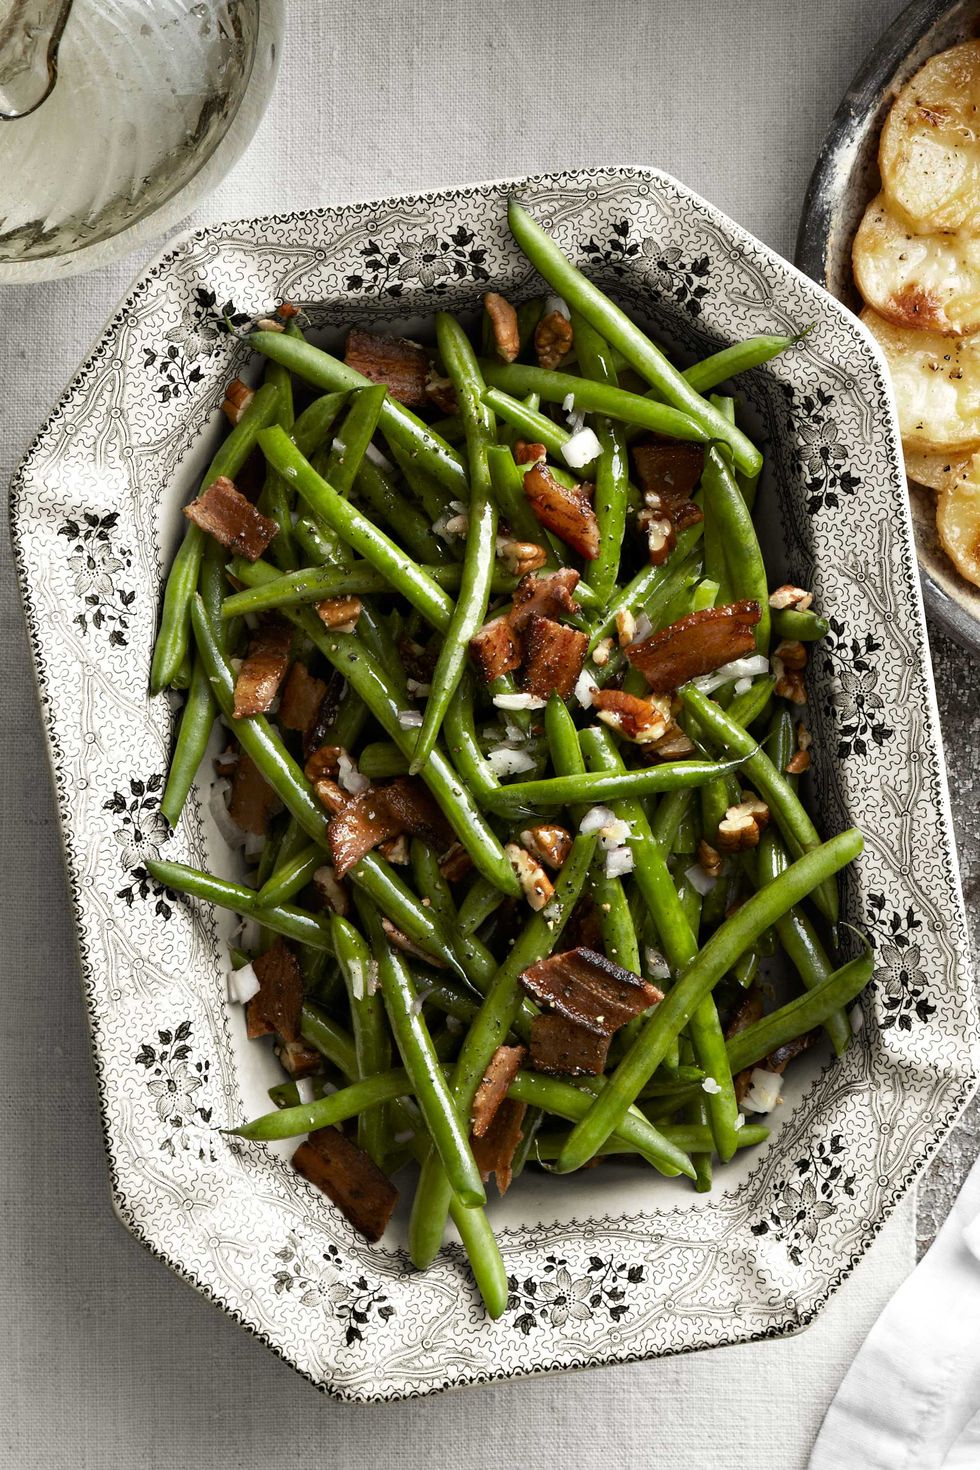 25 Best Thanksgiving Green Bean Recipes - Green Bean Side Dishes